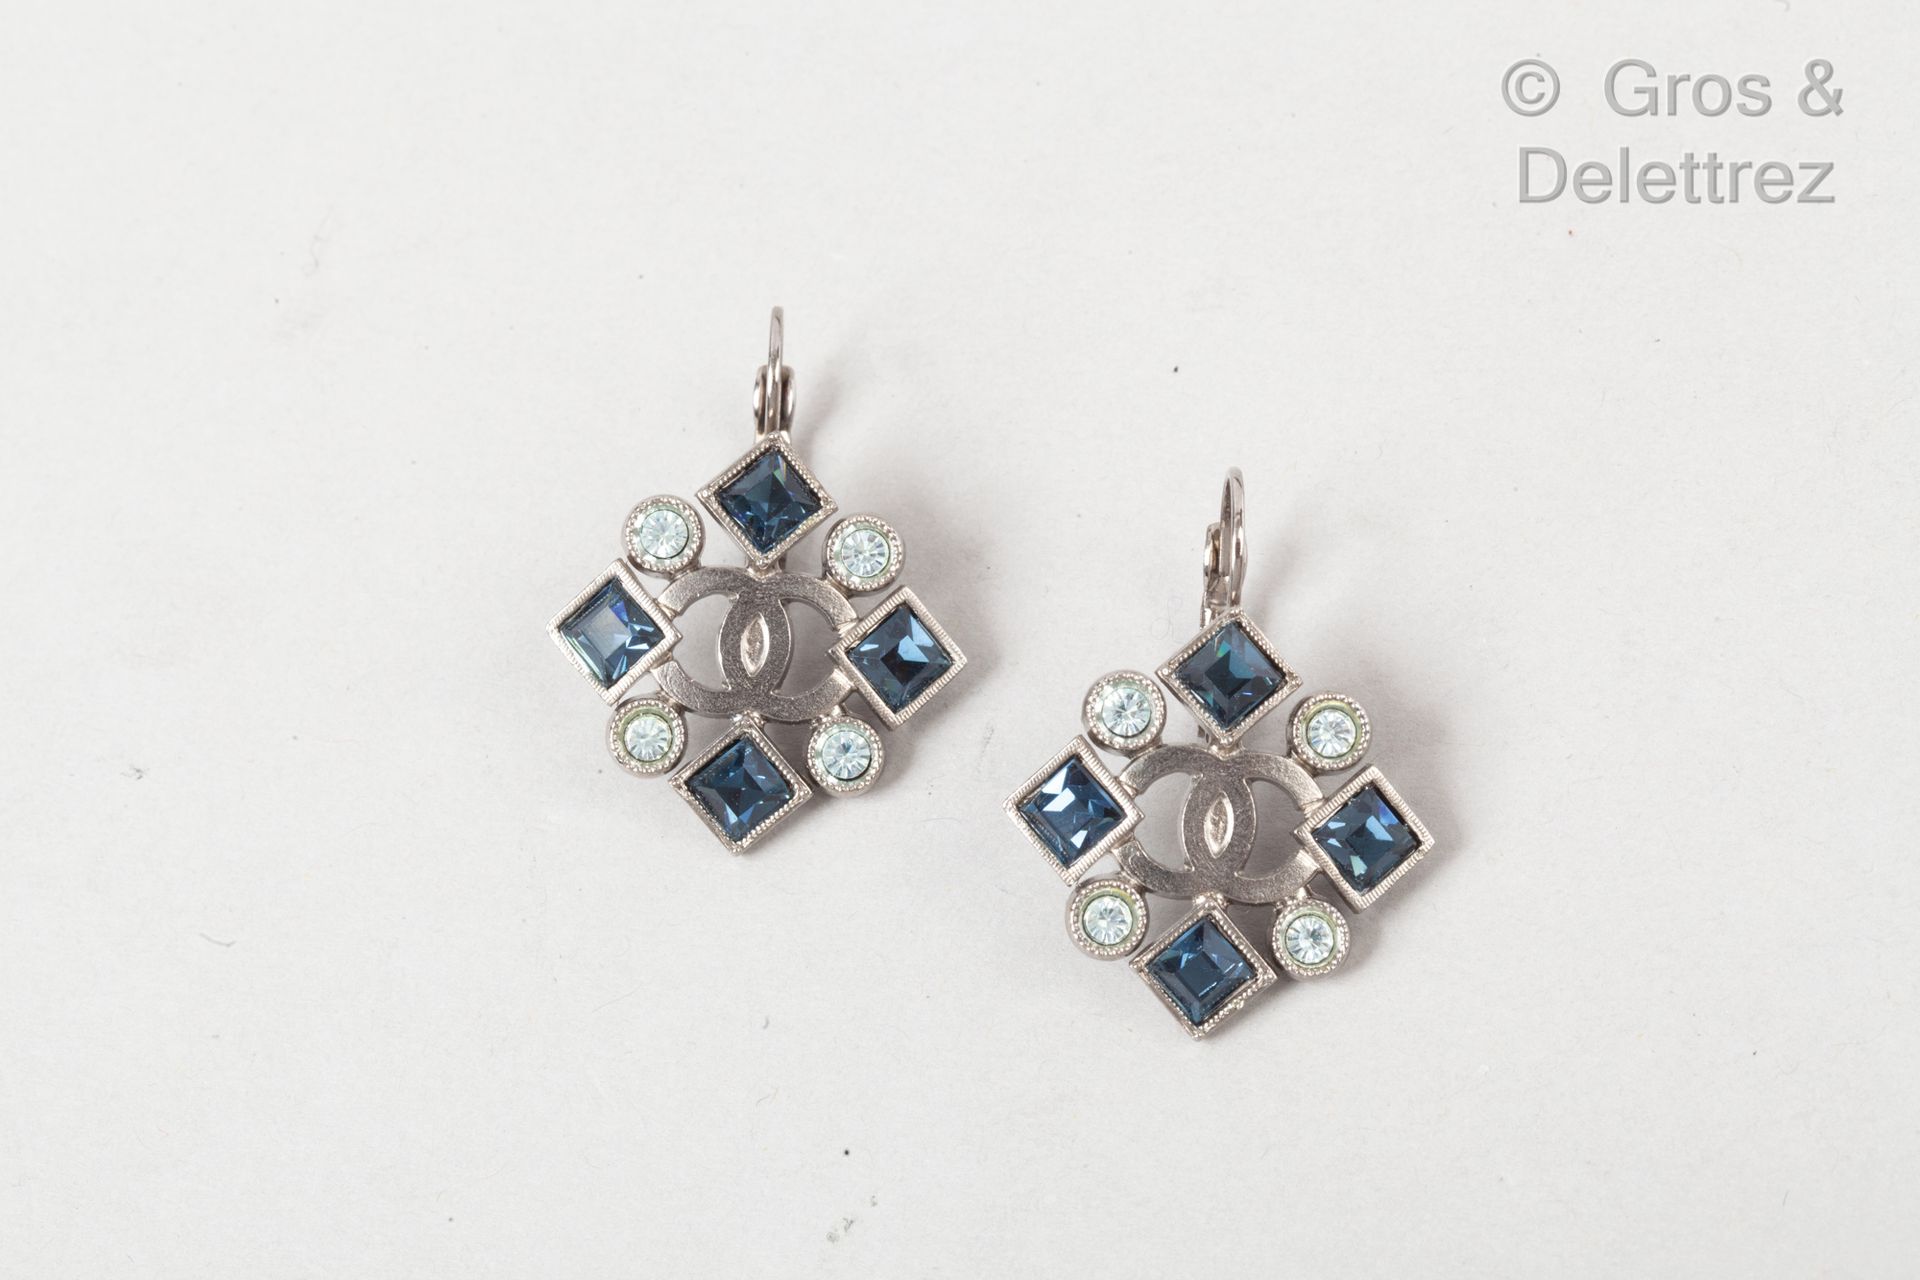 CHANEL par Virginie Viard 2019年邮轮系列

一对镀银钻石图案的穿孔耳环，镶嵌着仿蓝宝石的施华洛世奇水钻，光彩夺目，中间装饰着该品牌&hellip;